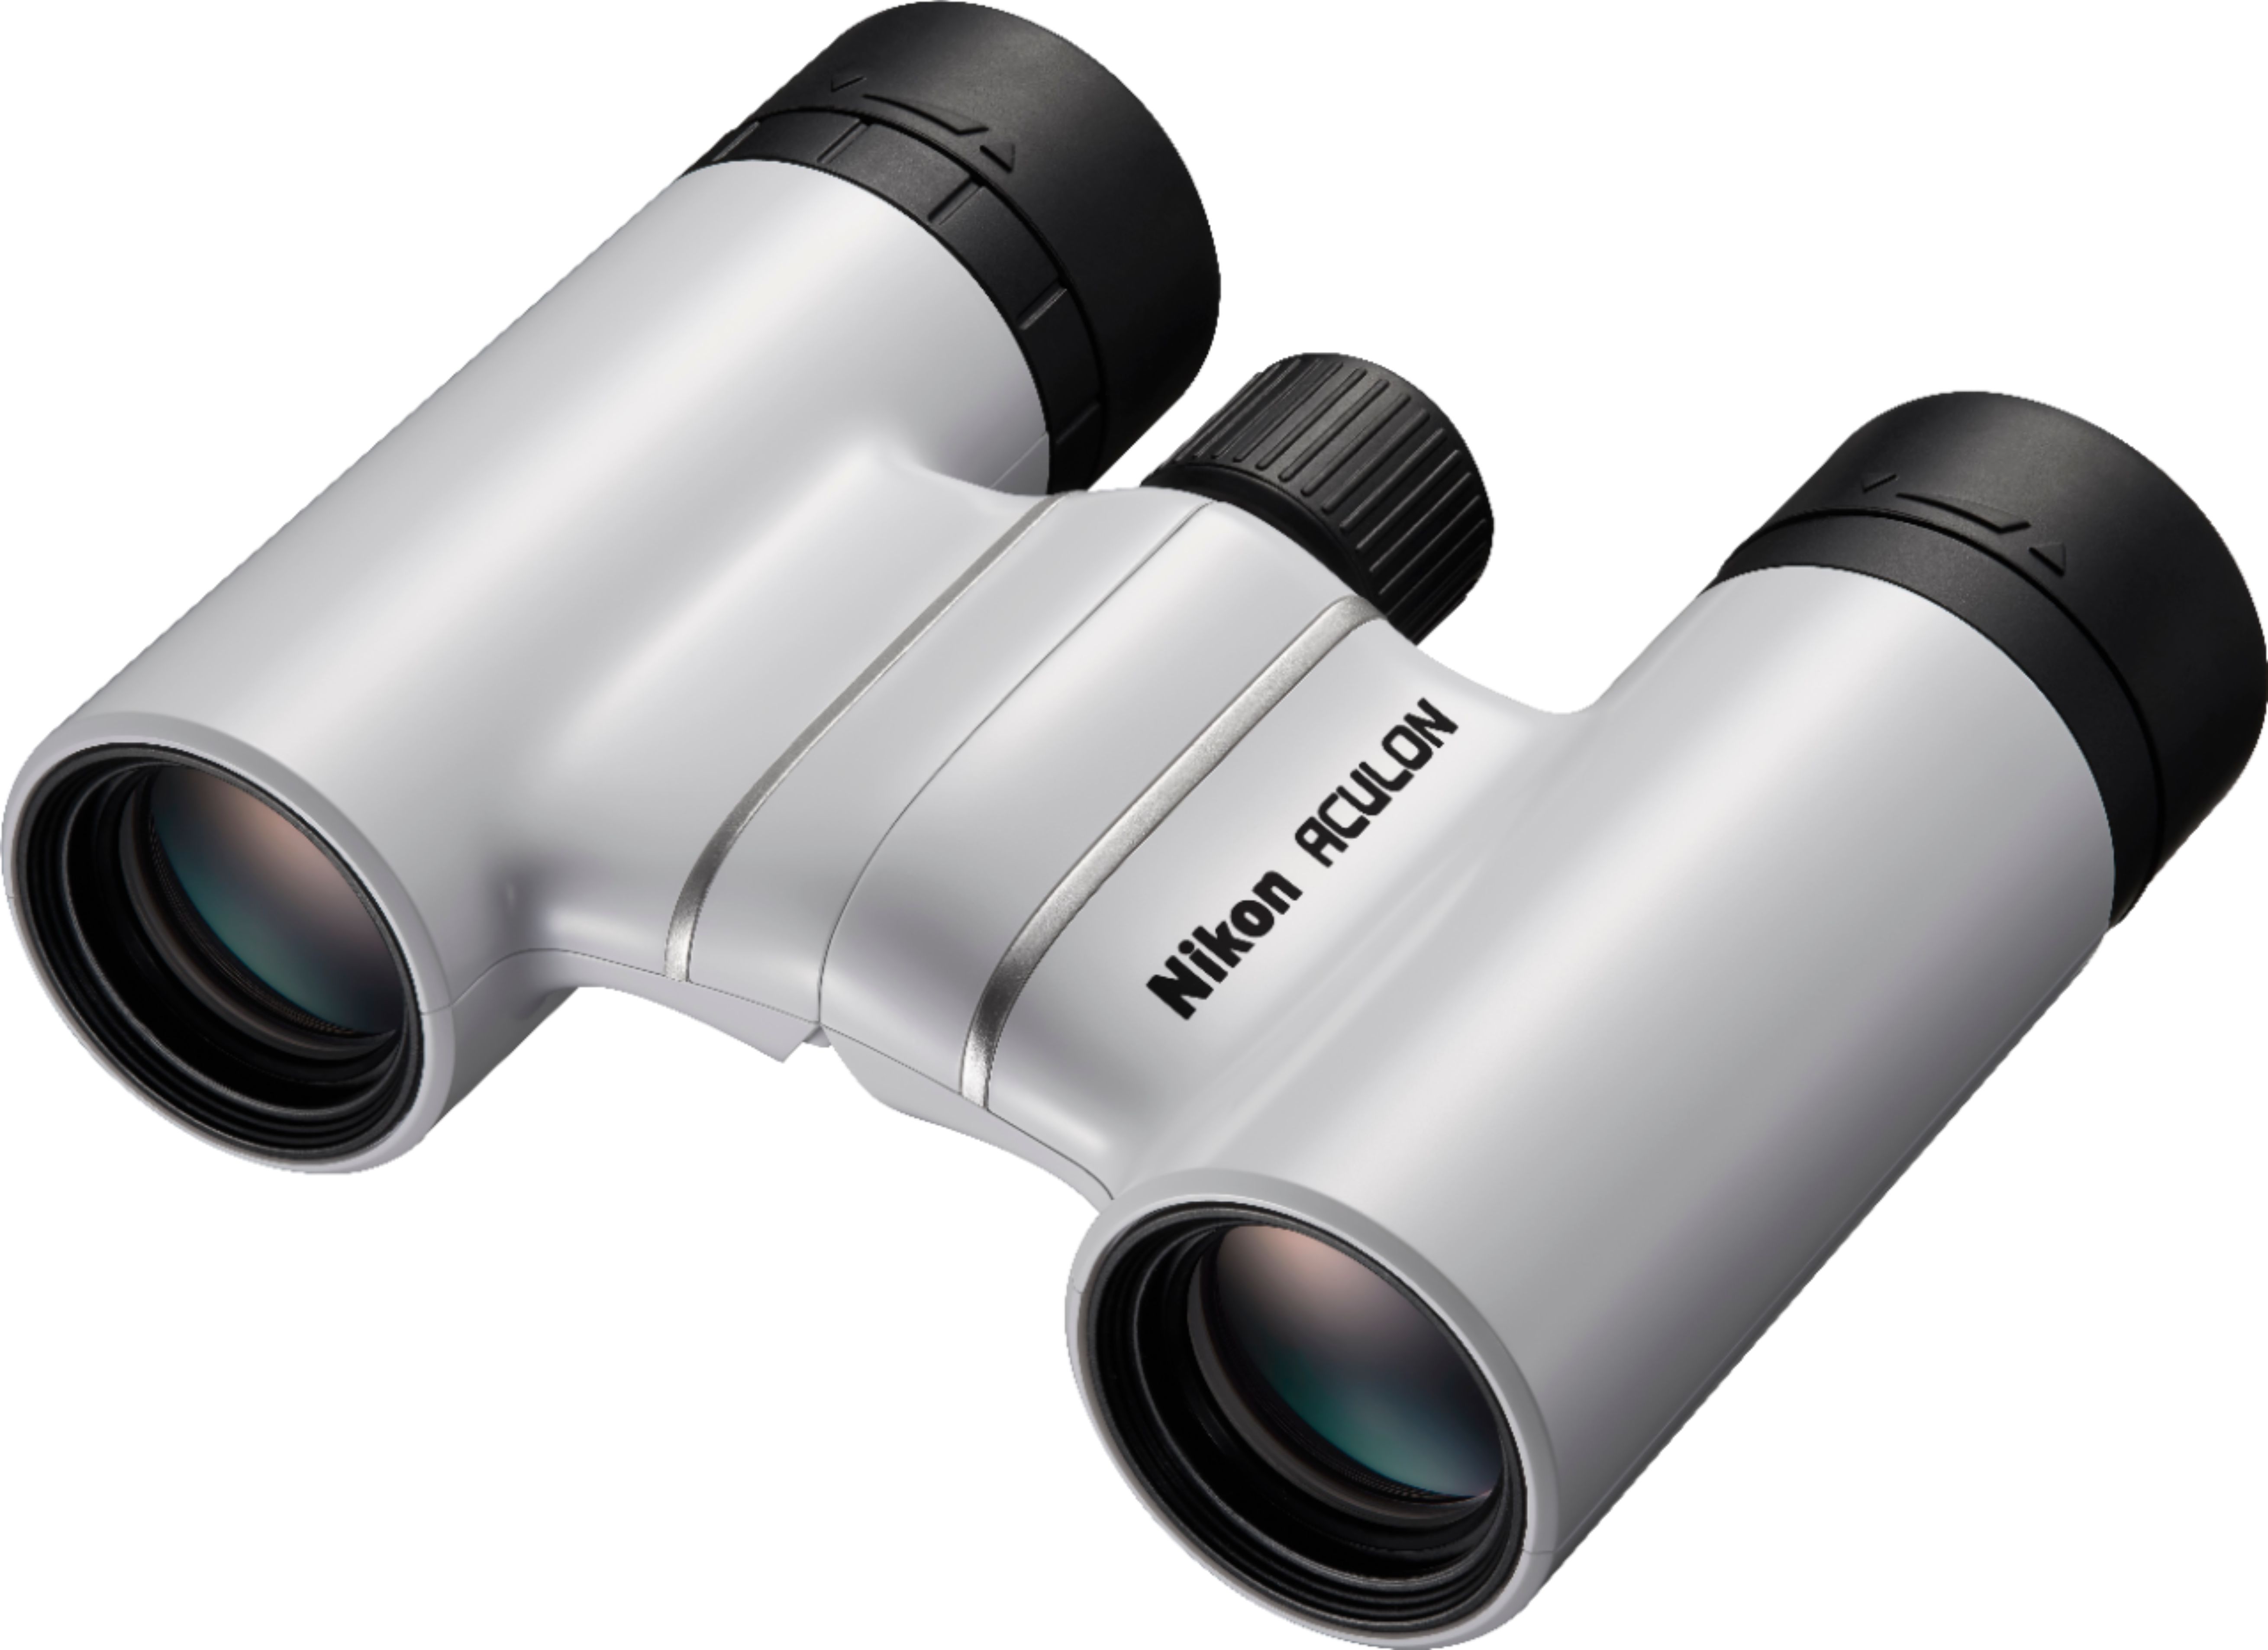 Angle View: Nikon - Aculon T02 8 x 21 Compact Binoculars - White